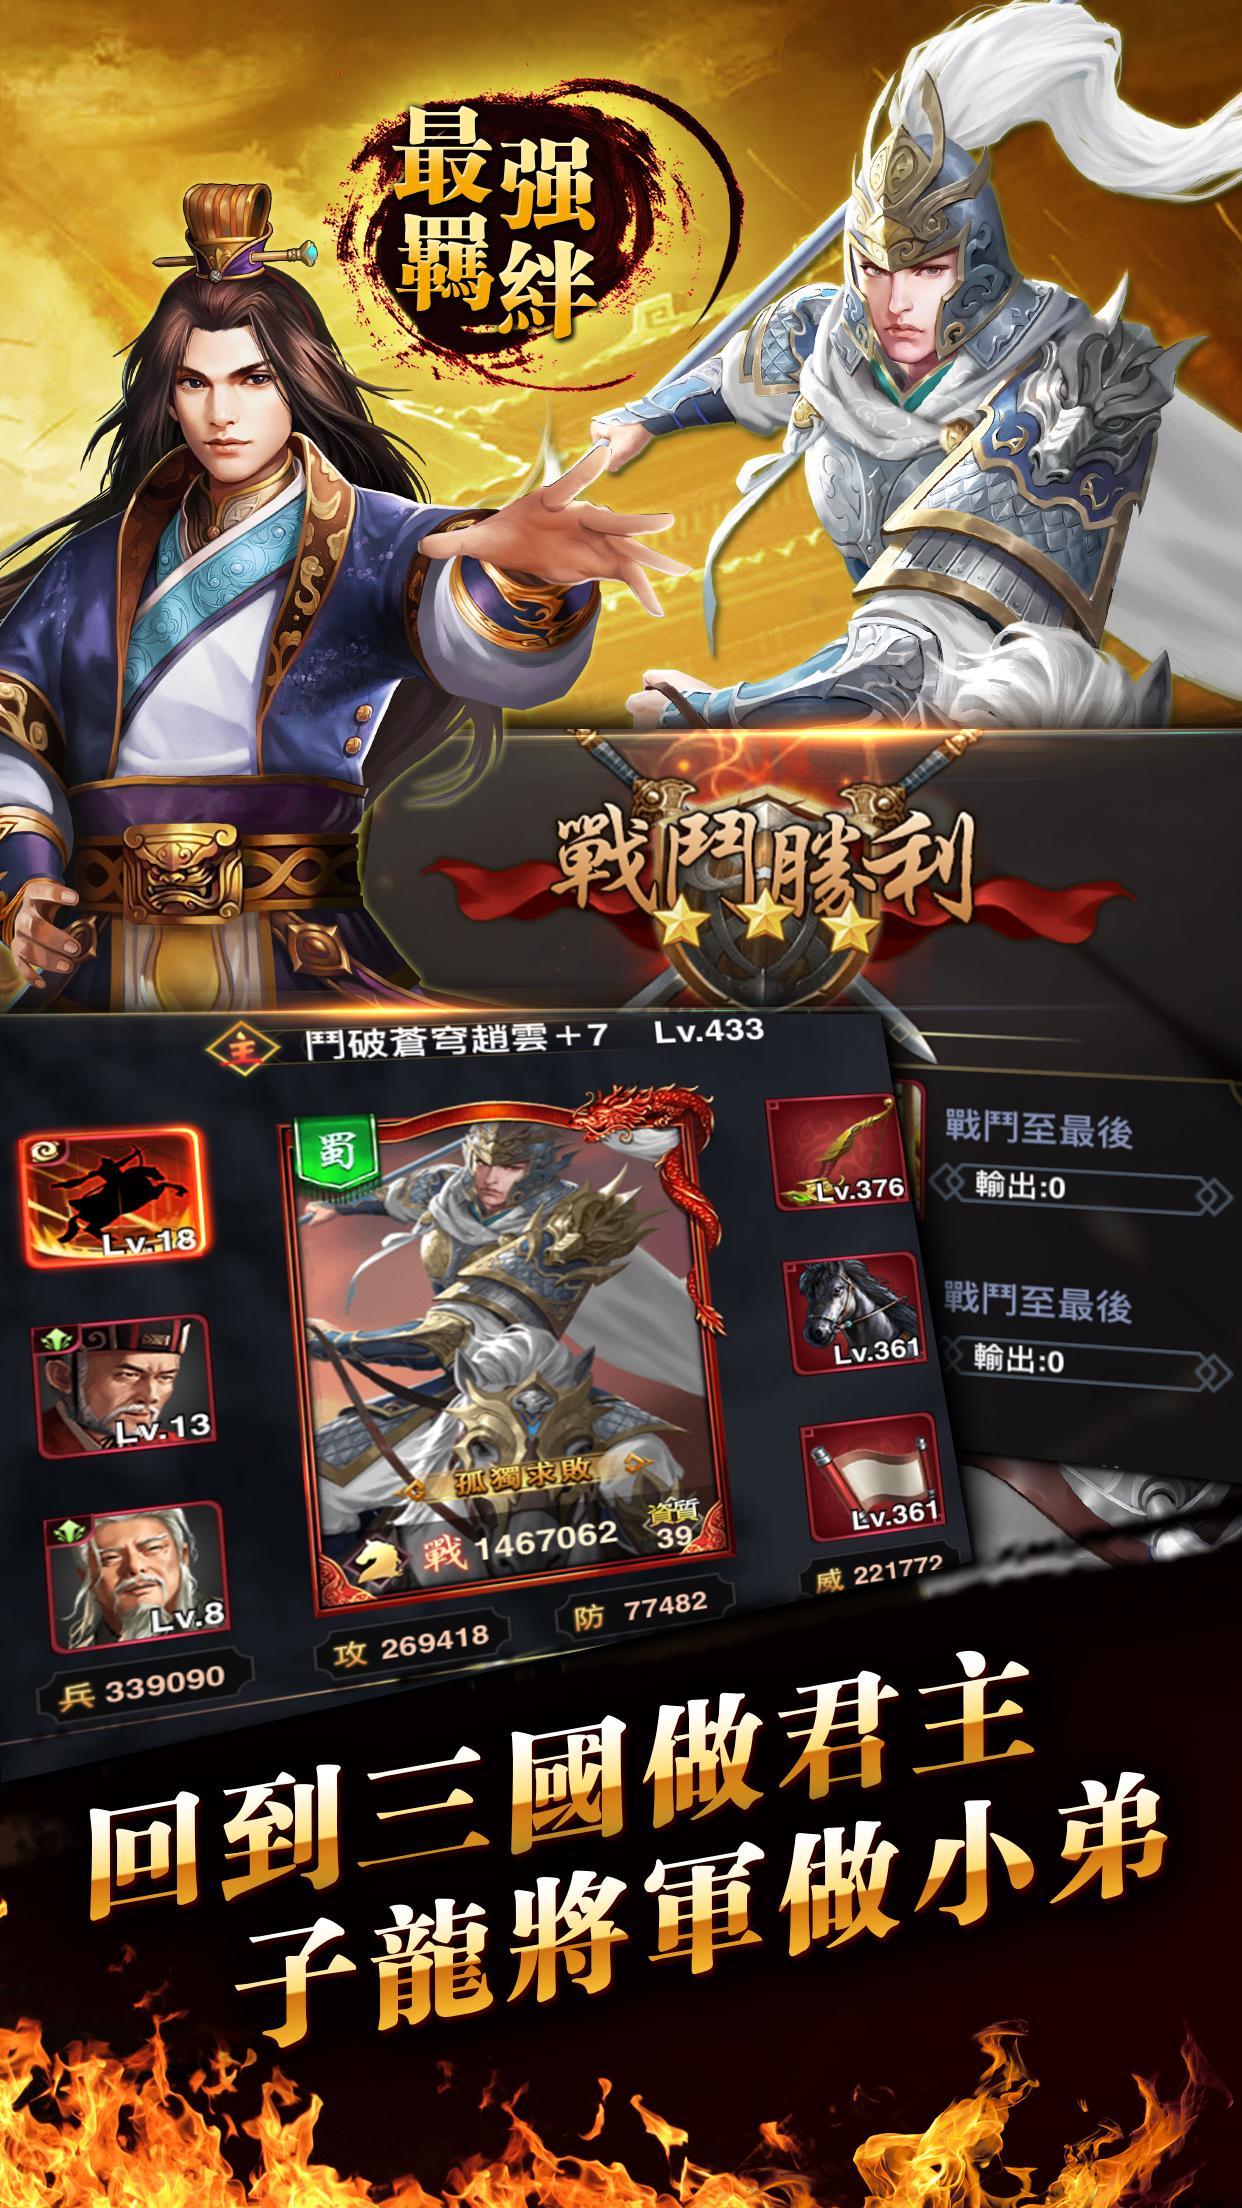 Screenshot 1 of Романтика трех королевств·Легенда о Чжао Юнь-Пустая игра трех королевств 